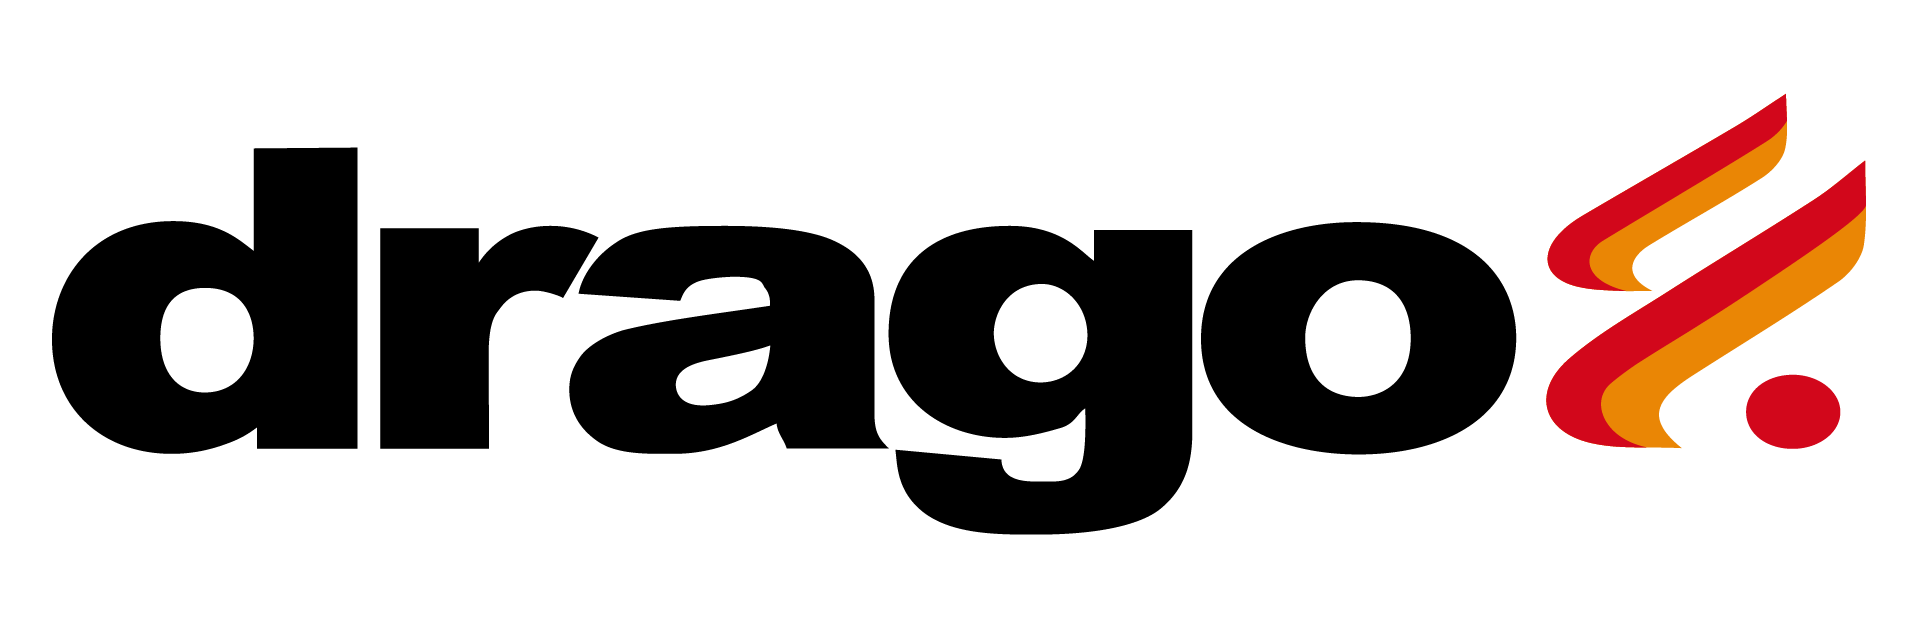 Drago Logo - Kinoxa Acero Inoxidable